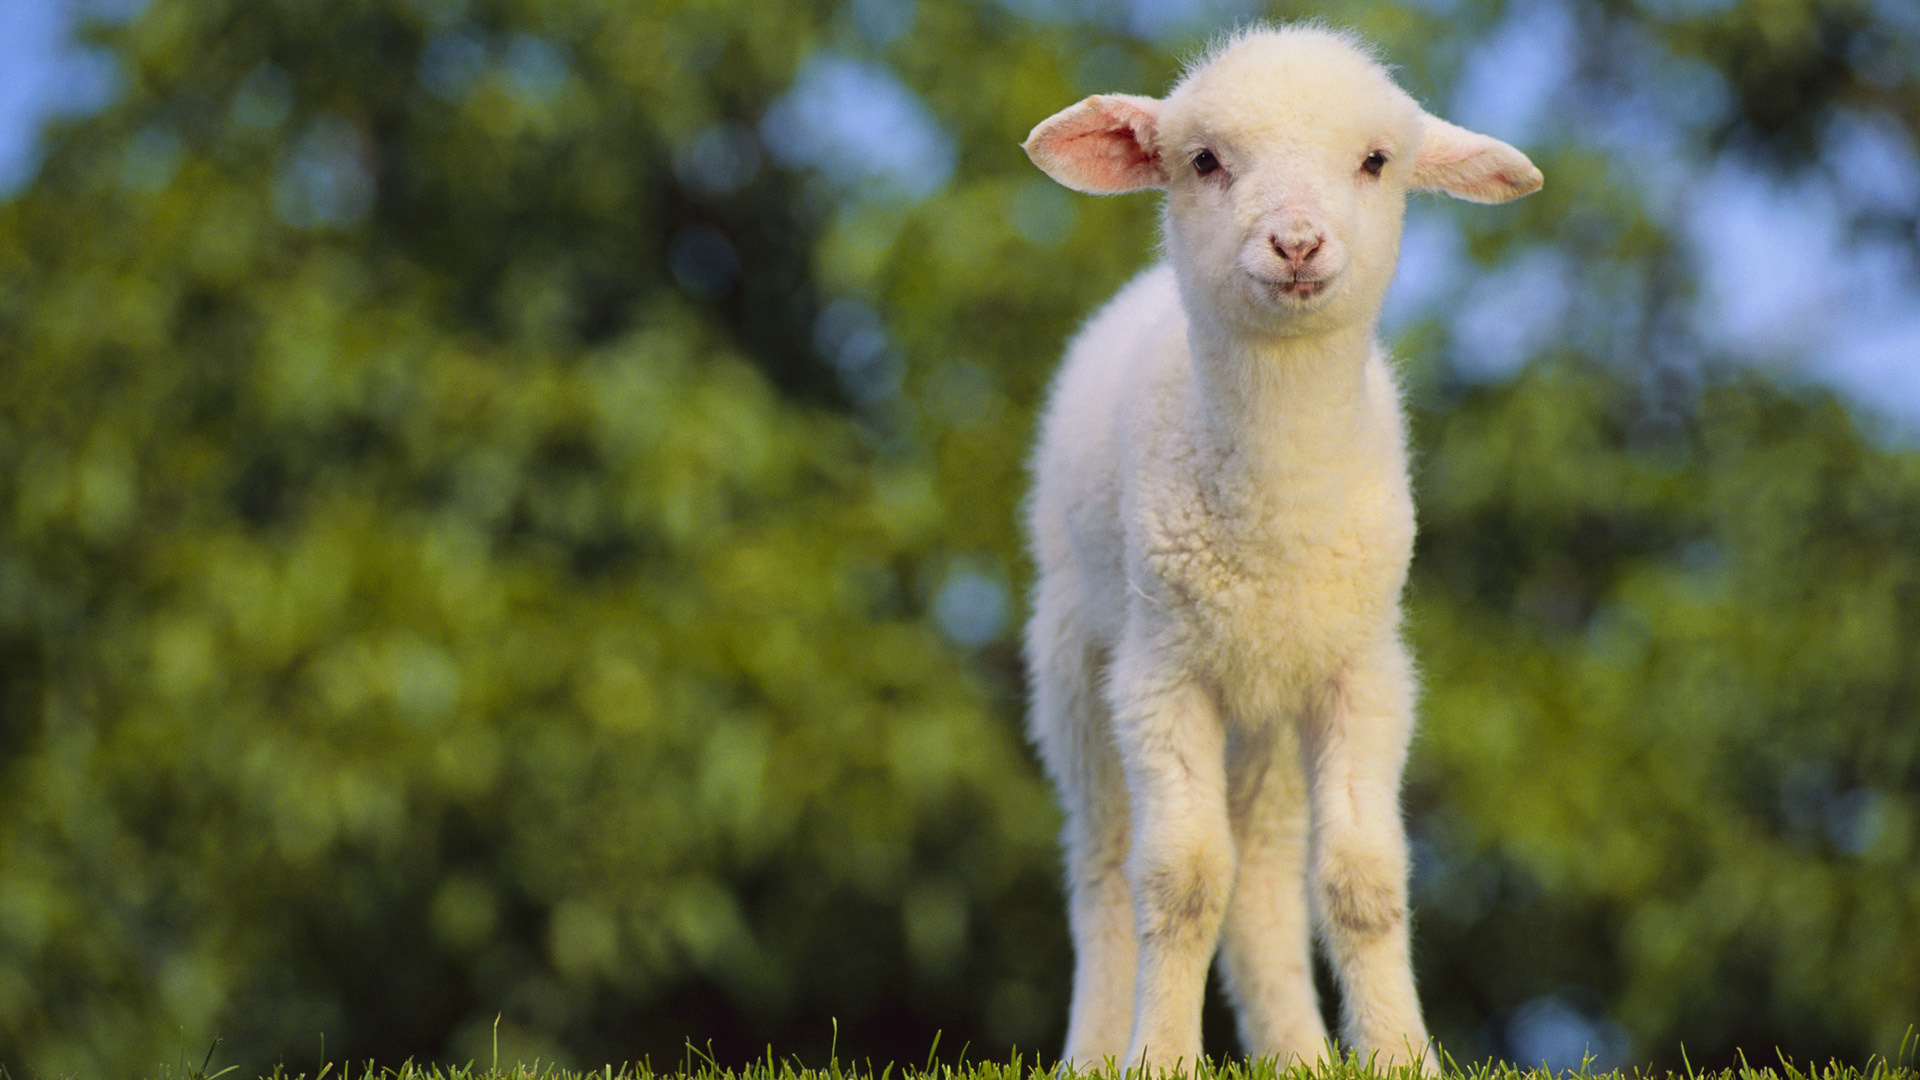 35003 Sheep Wallpapers Images Stock Photos  Vectors  Shutterstock